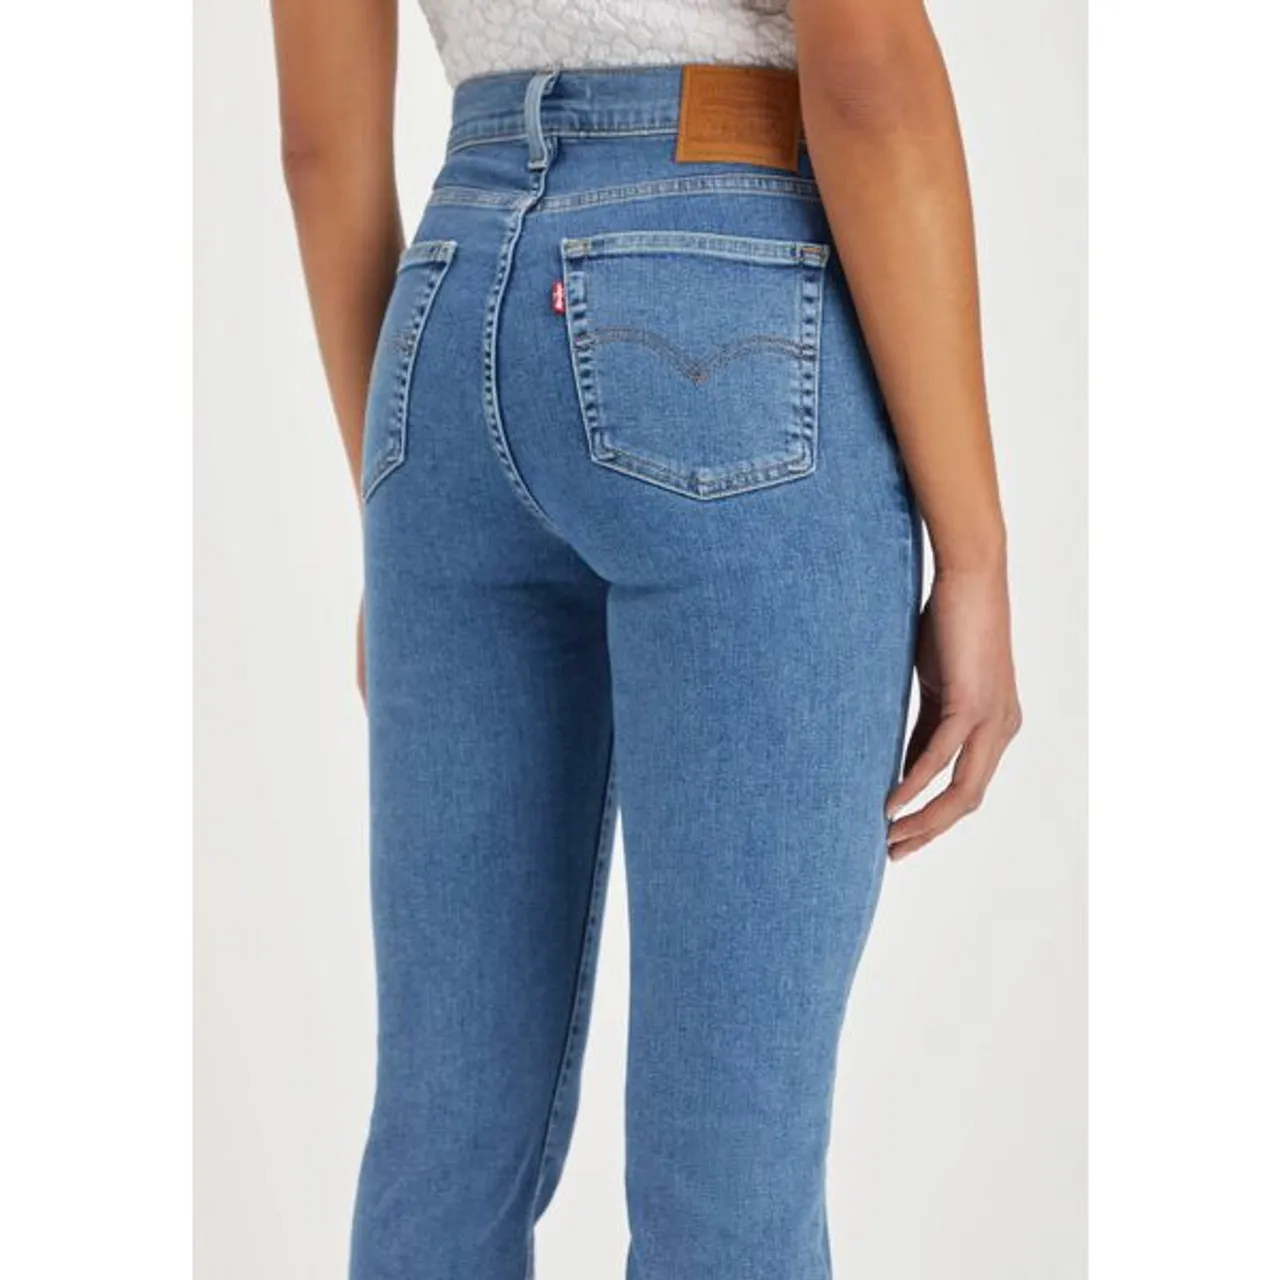 Straight-Jeans LEVI'S "724 High Rise Straight" Gr. 30, Länge 34, blau (beach break stone) Damen Jeans Gerade